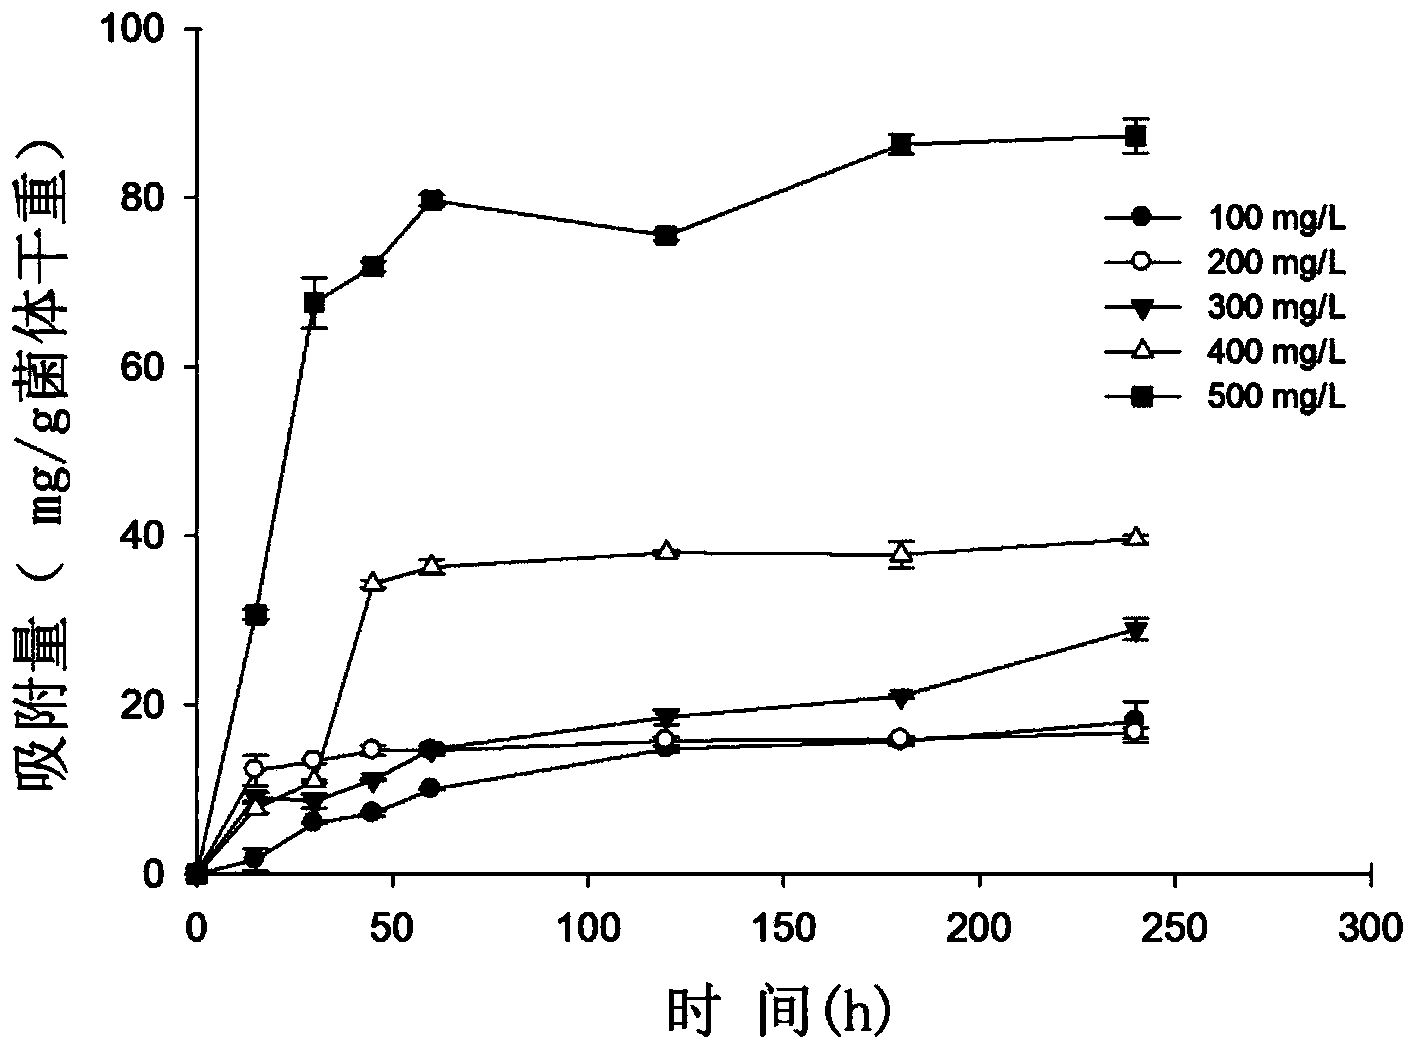 High-cadmium-adsorption filamentous fungi penicillium chrysogenum J-5 as well as preparation method and application thereof